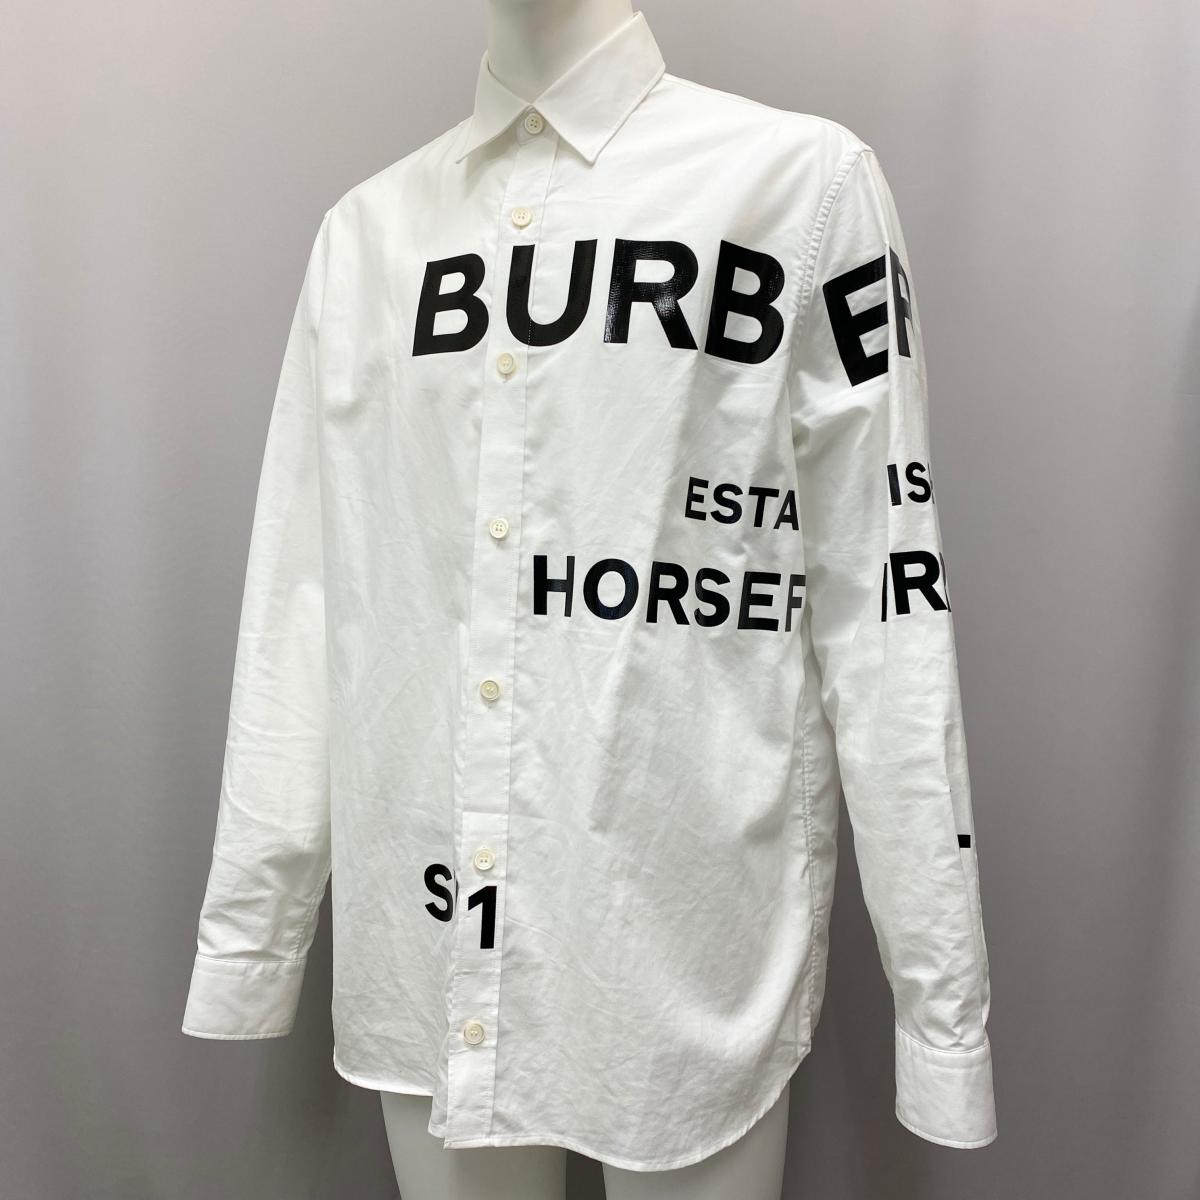 ◆BURBERRY バーバリー ホースフェリープリントOX オーバーサイズシャツ サイズM◆20SS/white  /白/ホワイト/メンズ/トップス/KI1004【中古】 | リサイクル ティファナ